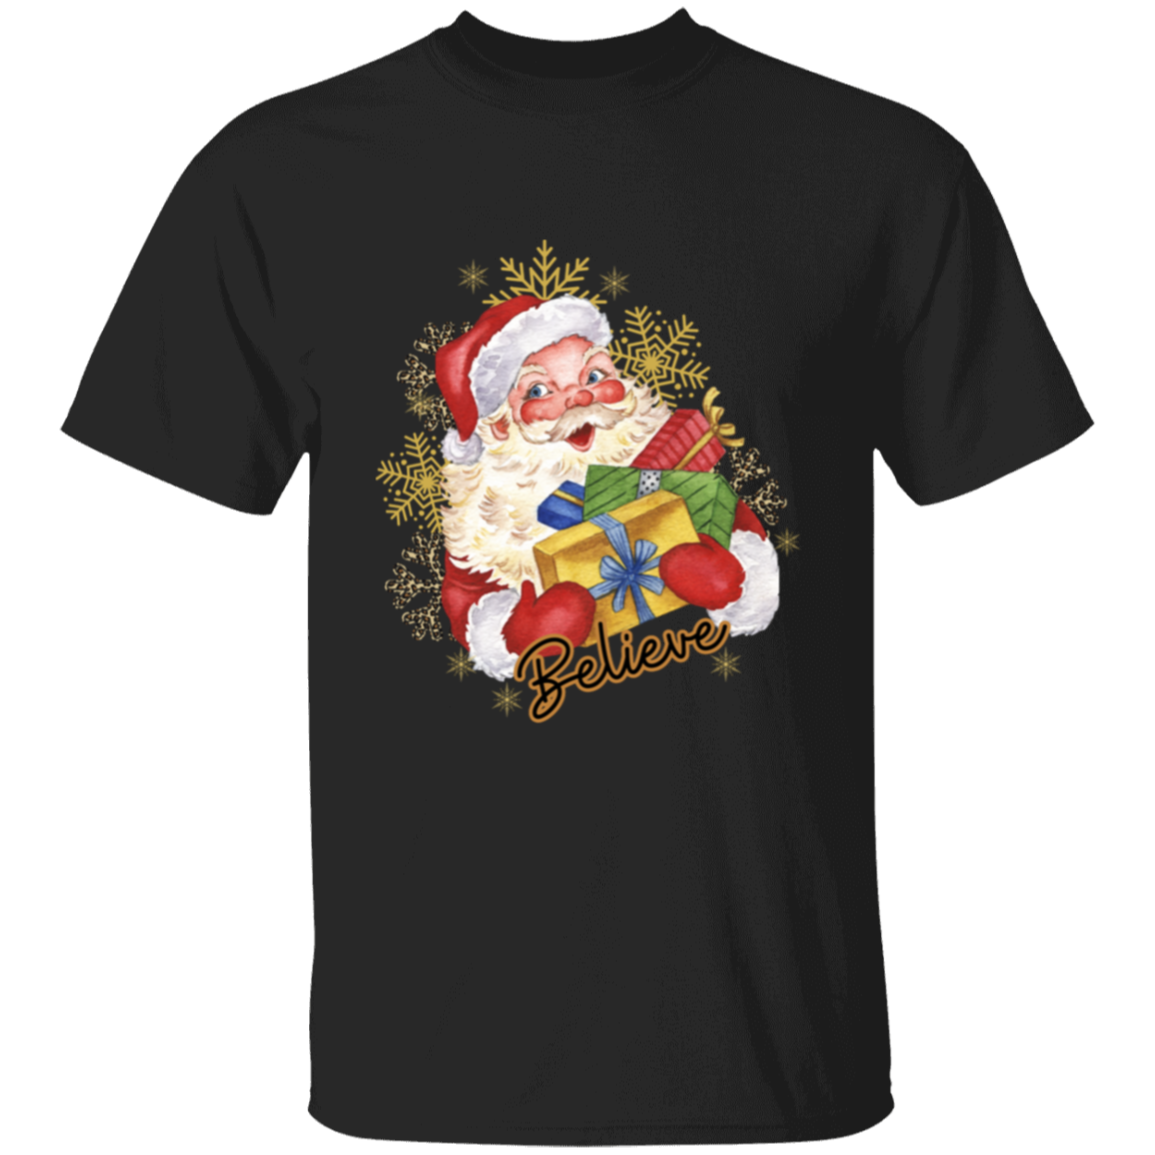 Believe Christmas Santa T-Shirt Unisex